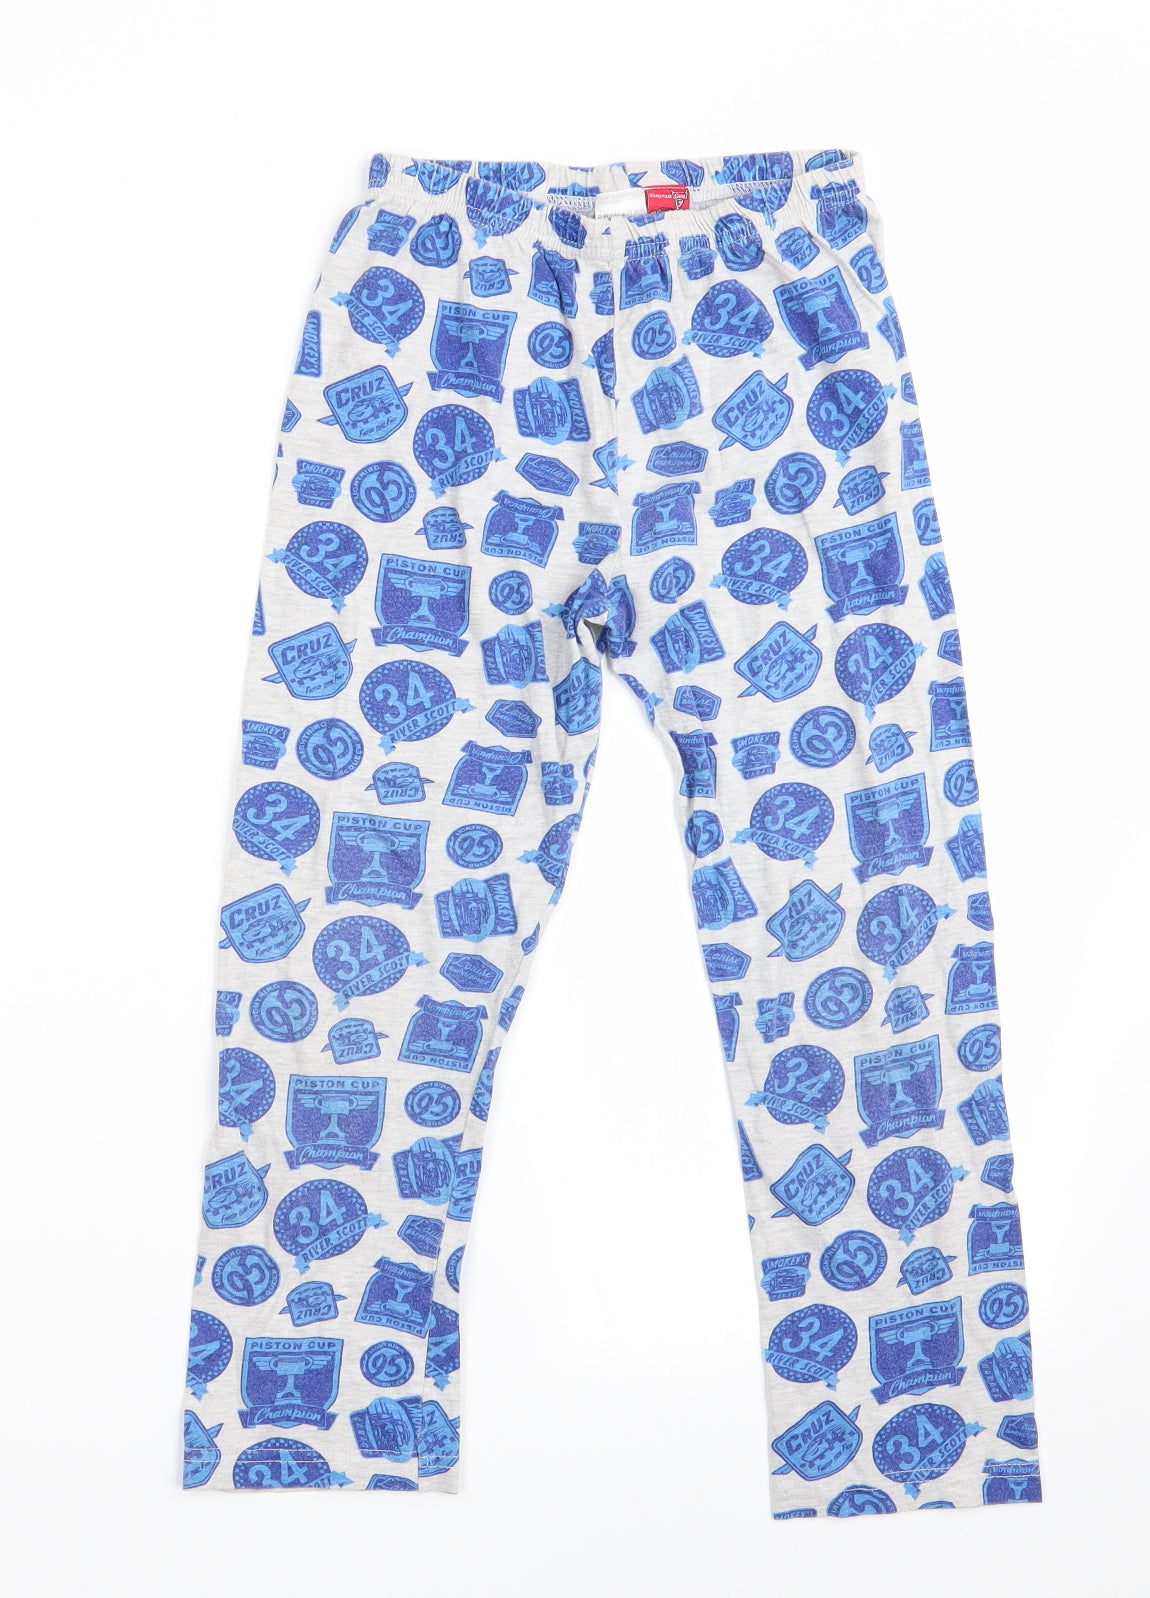 Primark Boys Blue Geometric   Pyjama Pants Size 6-7 Years  - Elastic waist